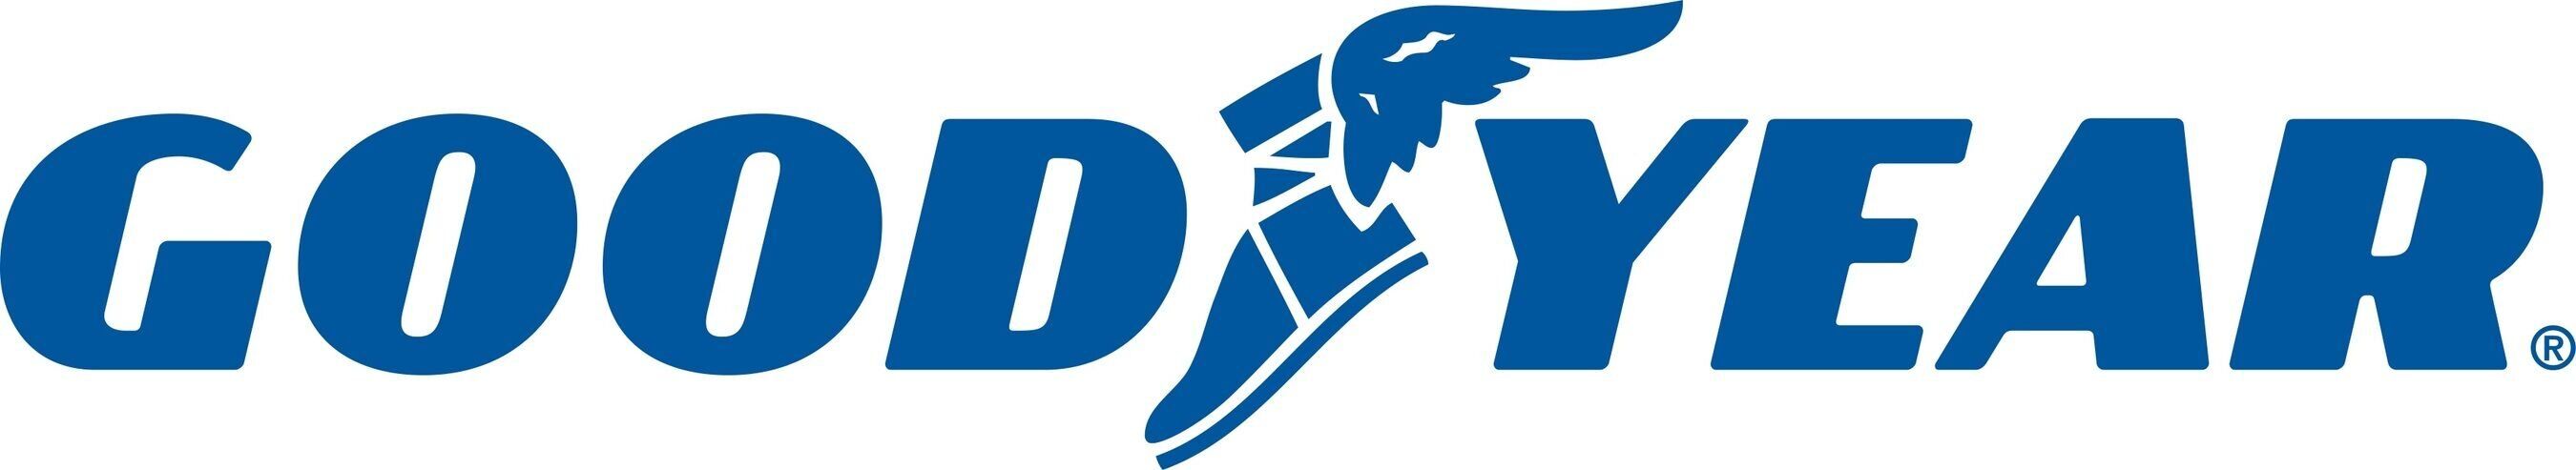 Dtdc Courier Logo Png, Transparent Png , Transparent Png Image - PNGitem